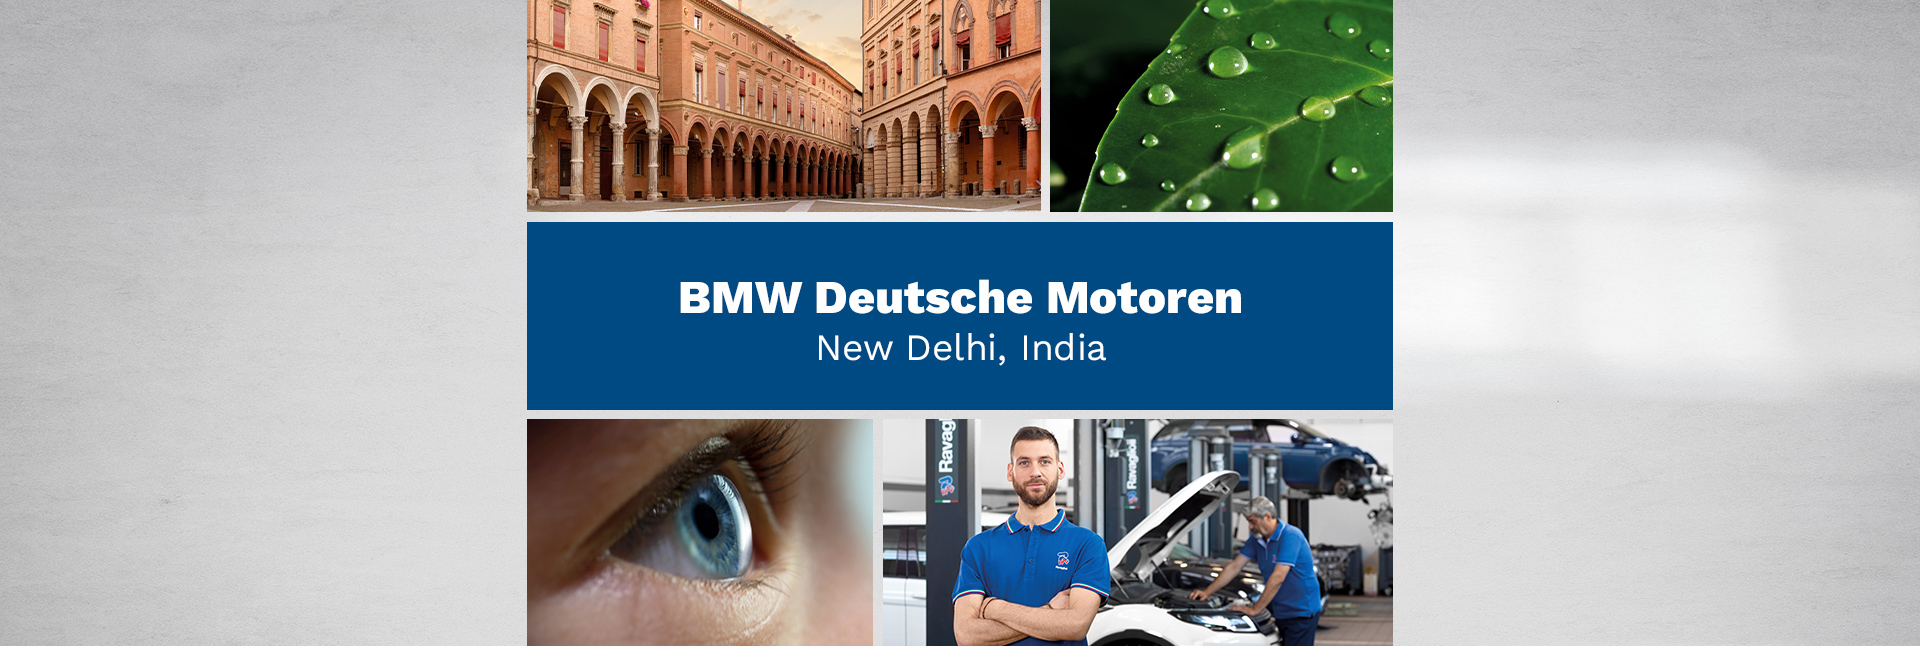 BMW Deutsche Motoren – New Delhi, India